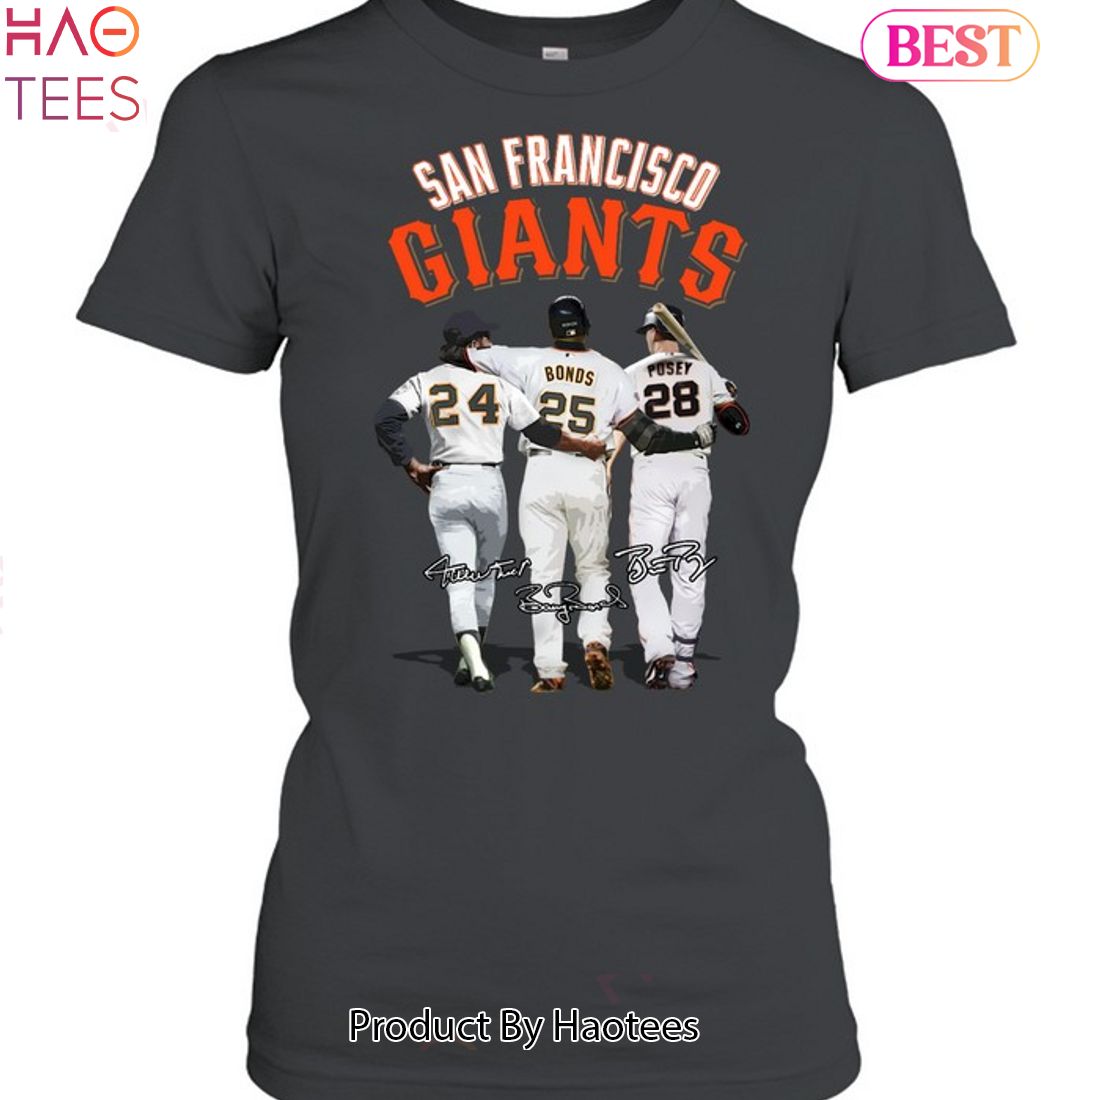 Majestic, Shirts, San Francisco Giants Posey Jersey Size Medium